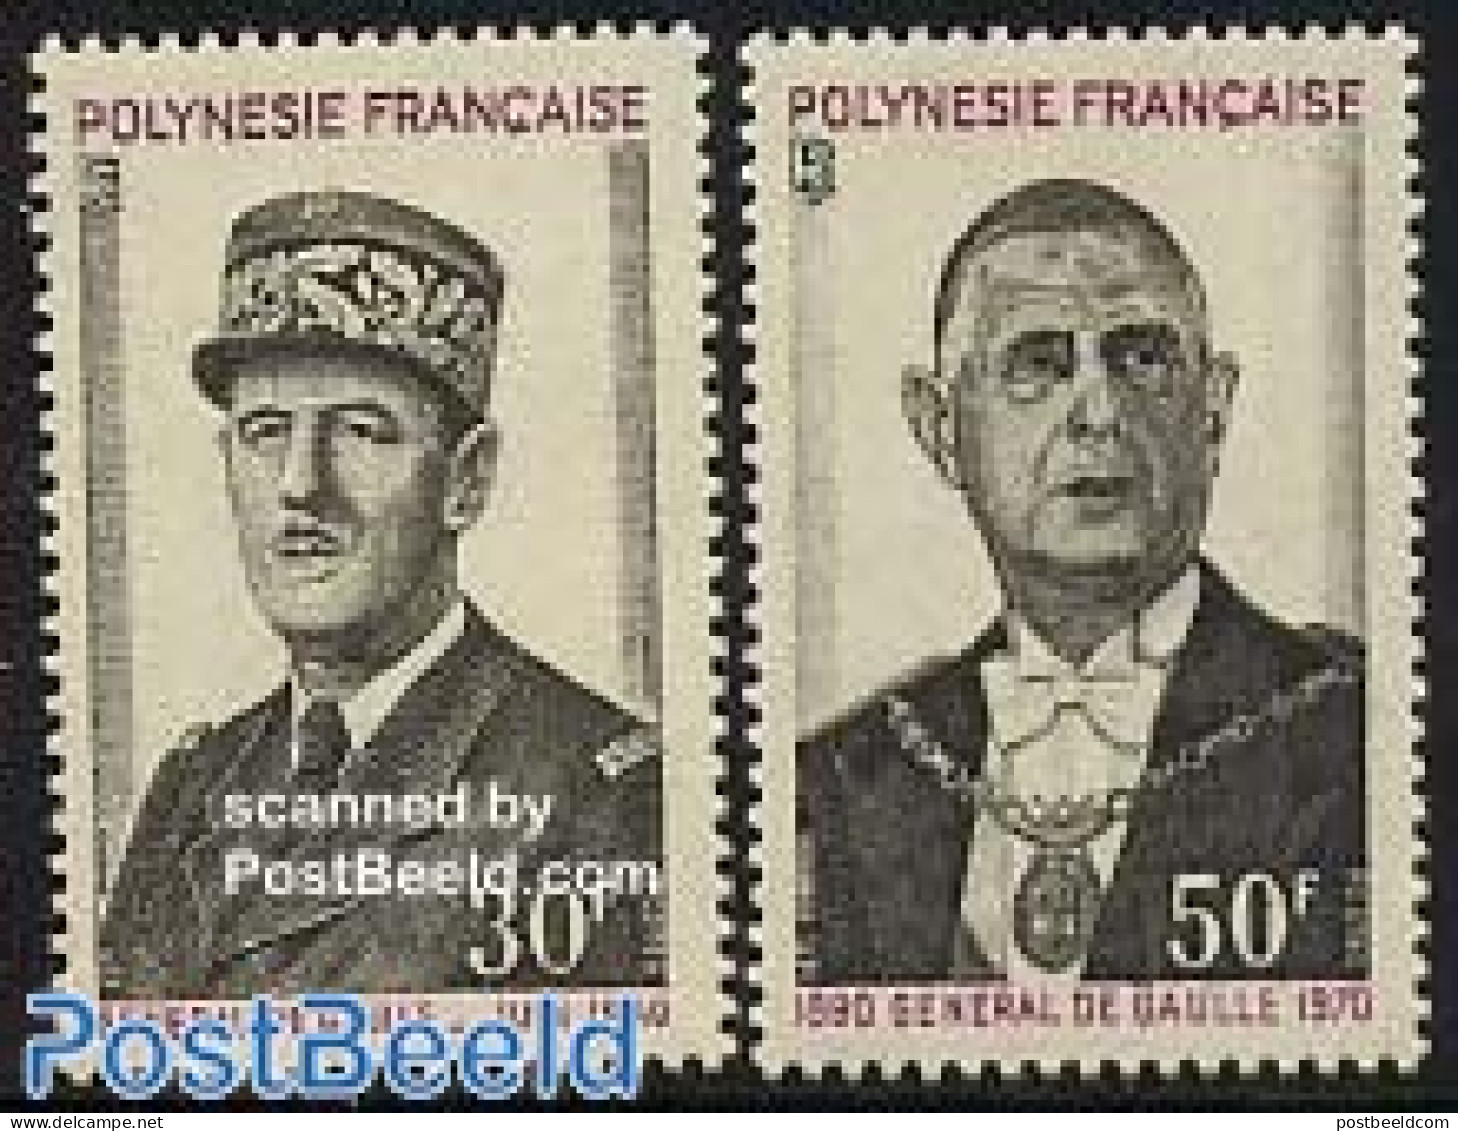 French Polynesia 1971 Charles De Gaulle 2v, Mint NH, History - Politicians - Ongebruikt